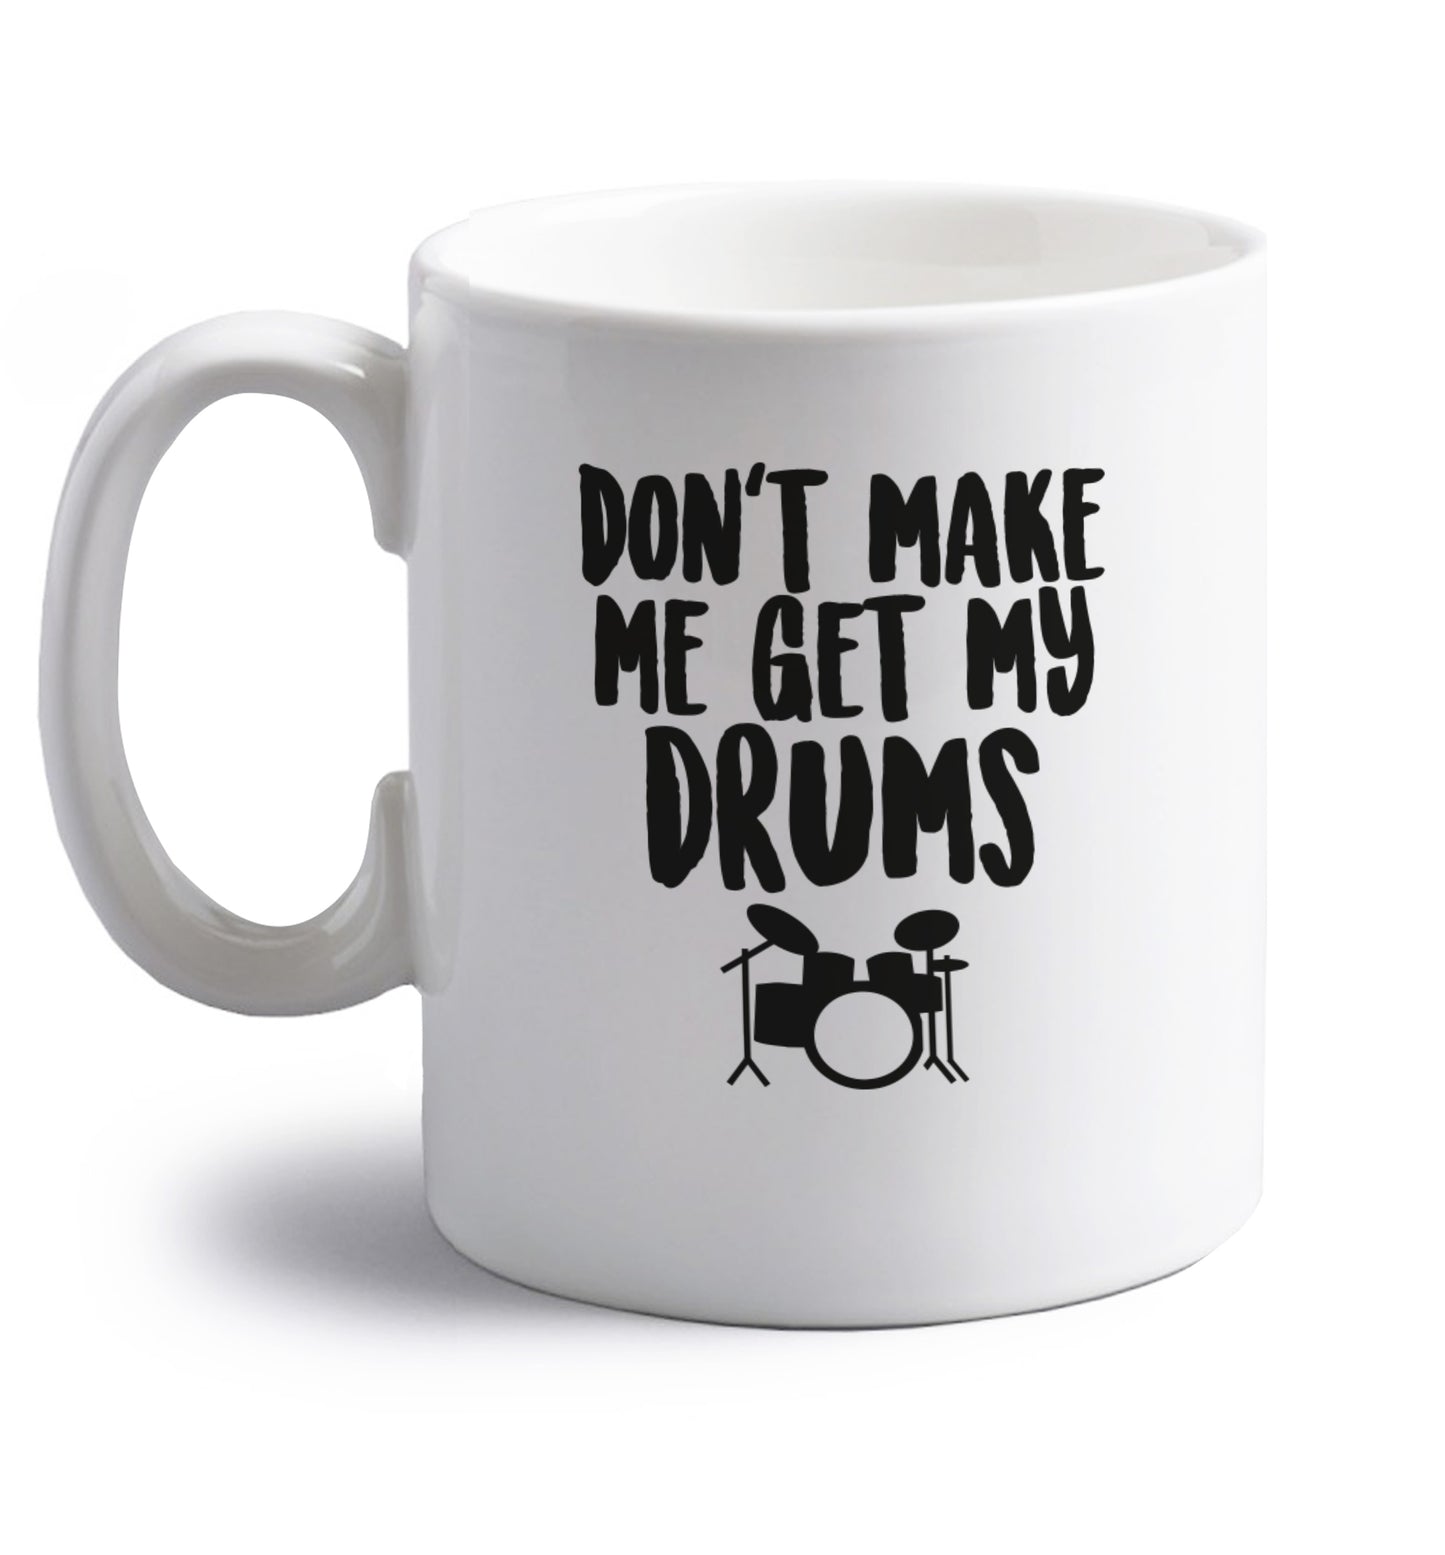 Don't make me get my drums right handed white ceramic mug 